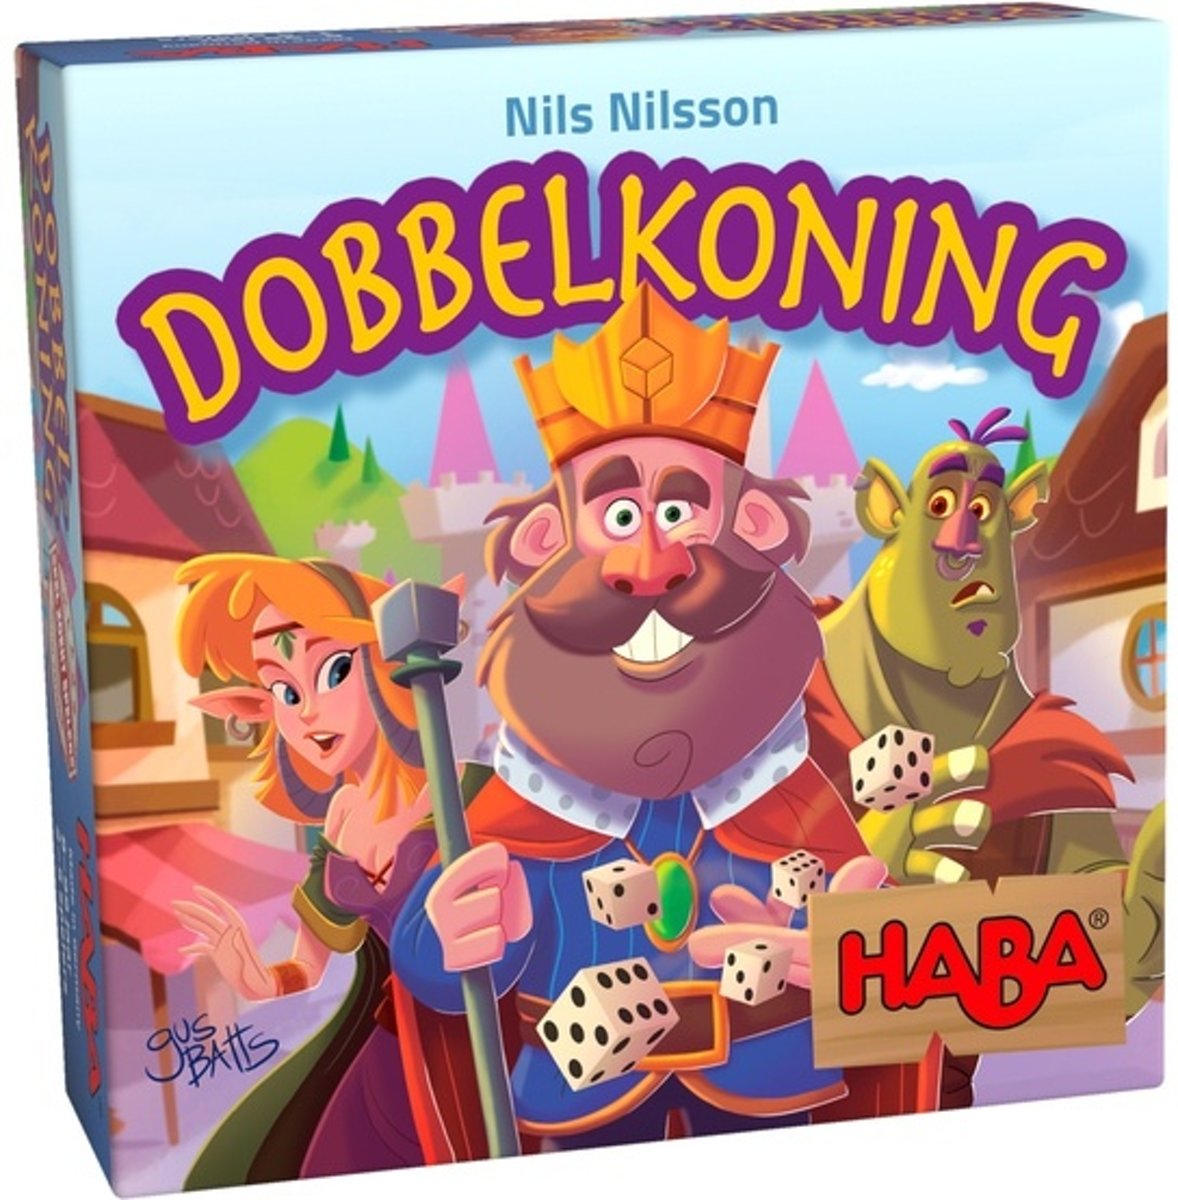 Haba Dobbelspel Dobbelkoning (nl)